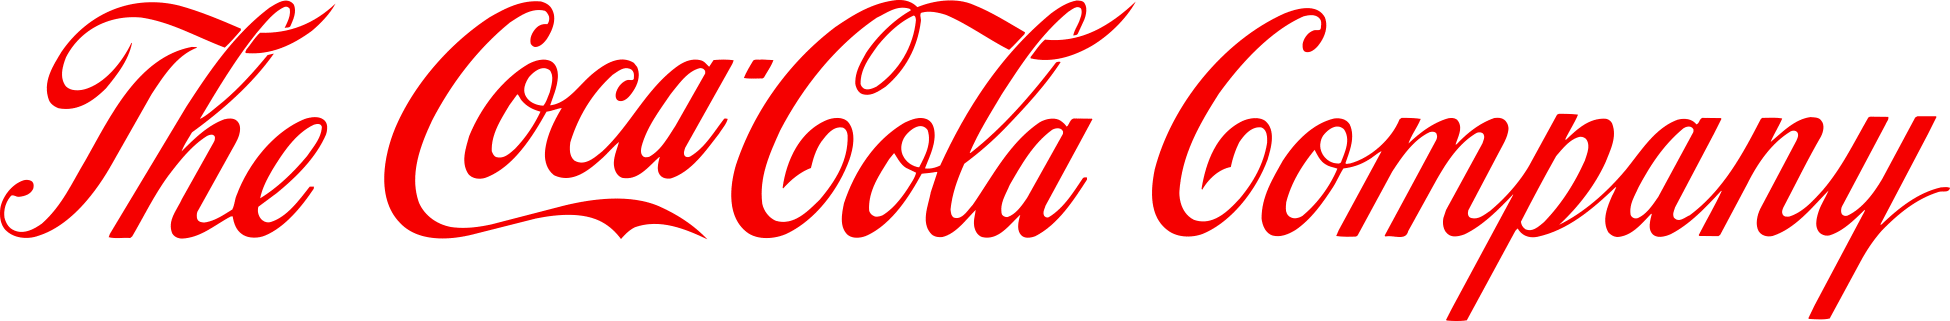 Coca Cola Logo PNG Image File